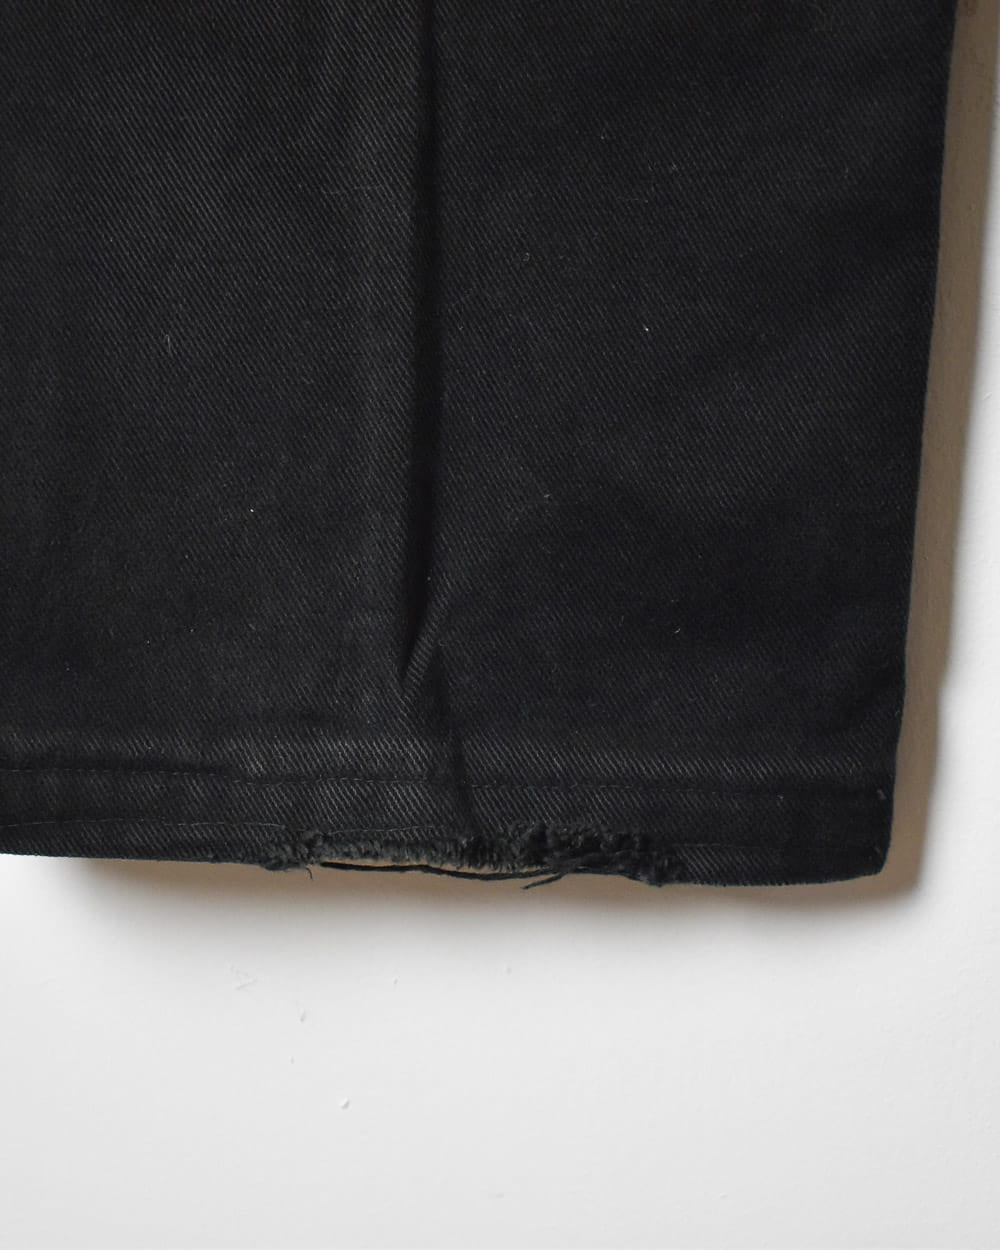 Black Levi's 501 Jeans - W38 L28